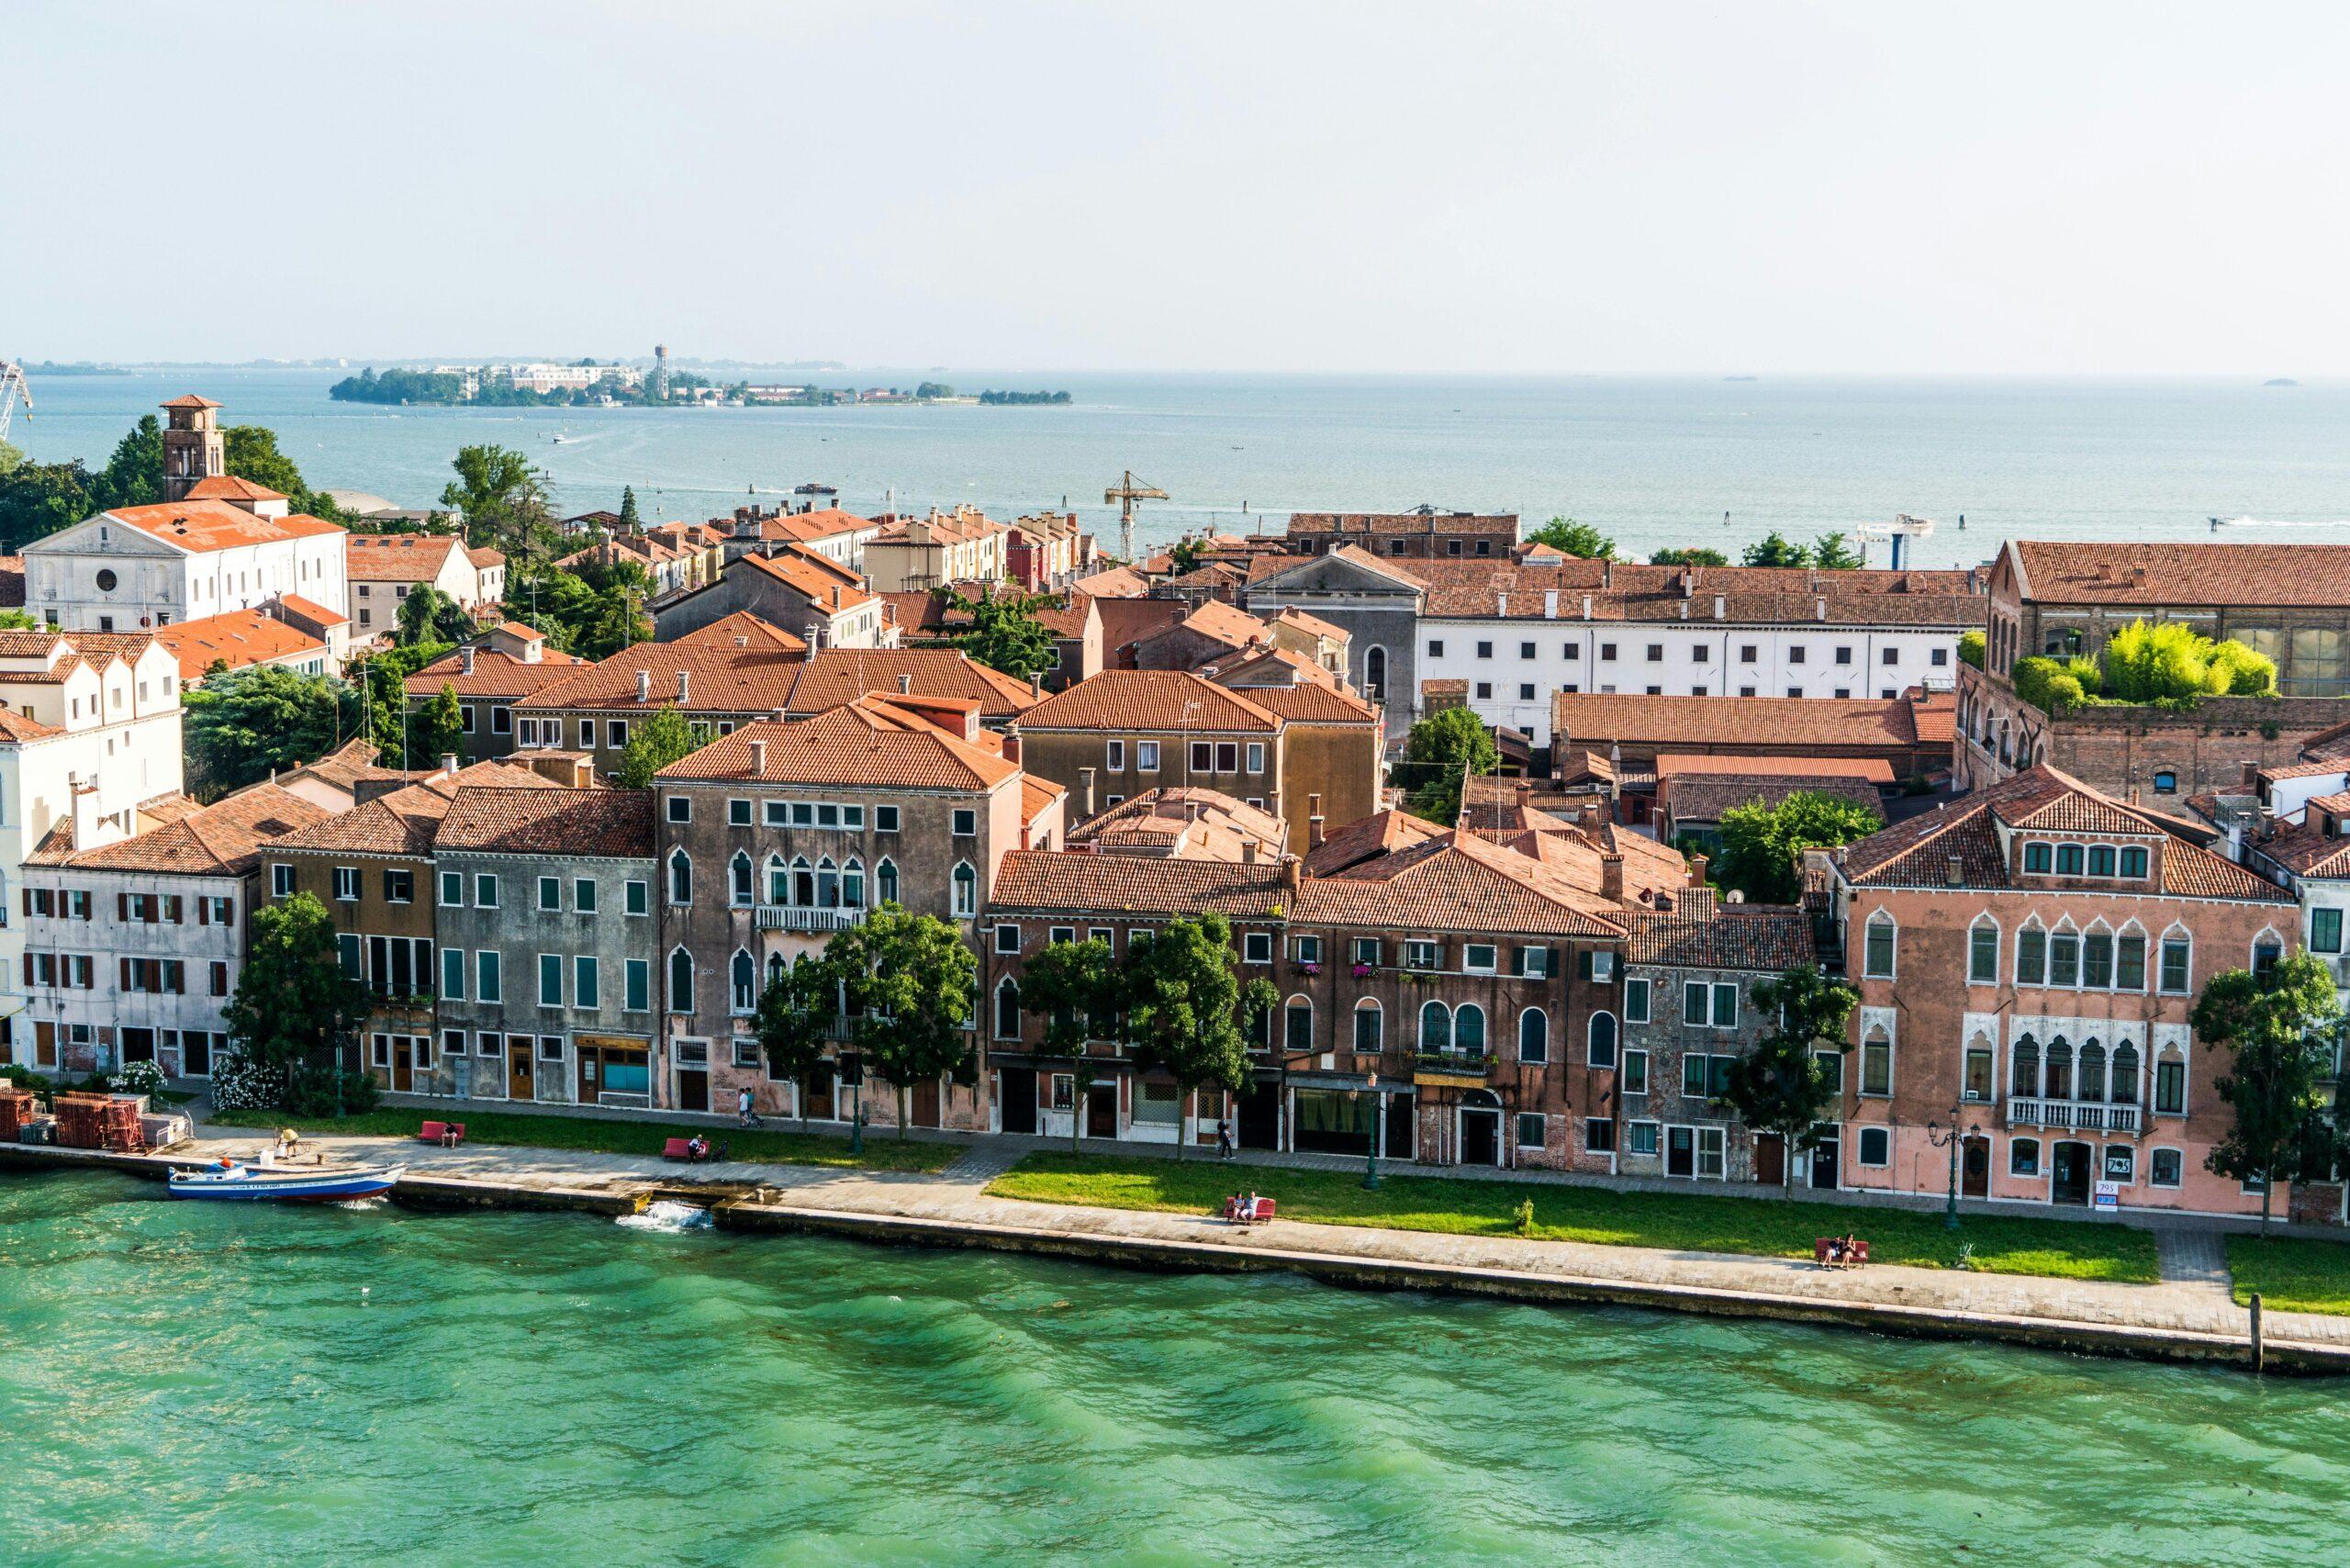 Romantic Getaway: Exploring the Canals of Venice, Italy 🛶🌹